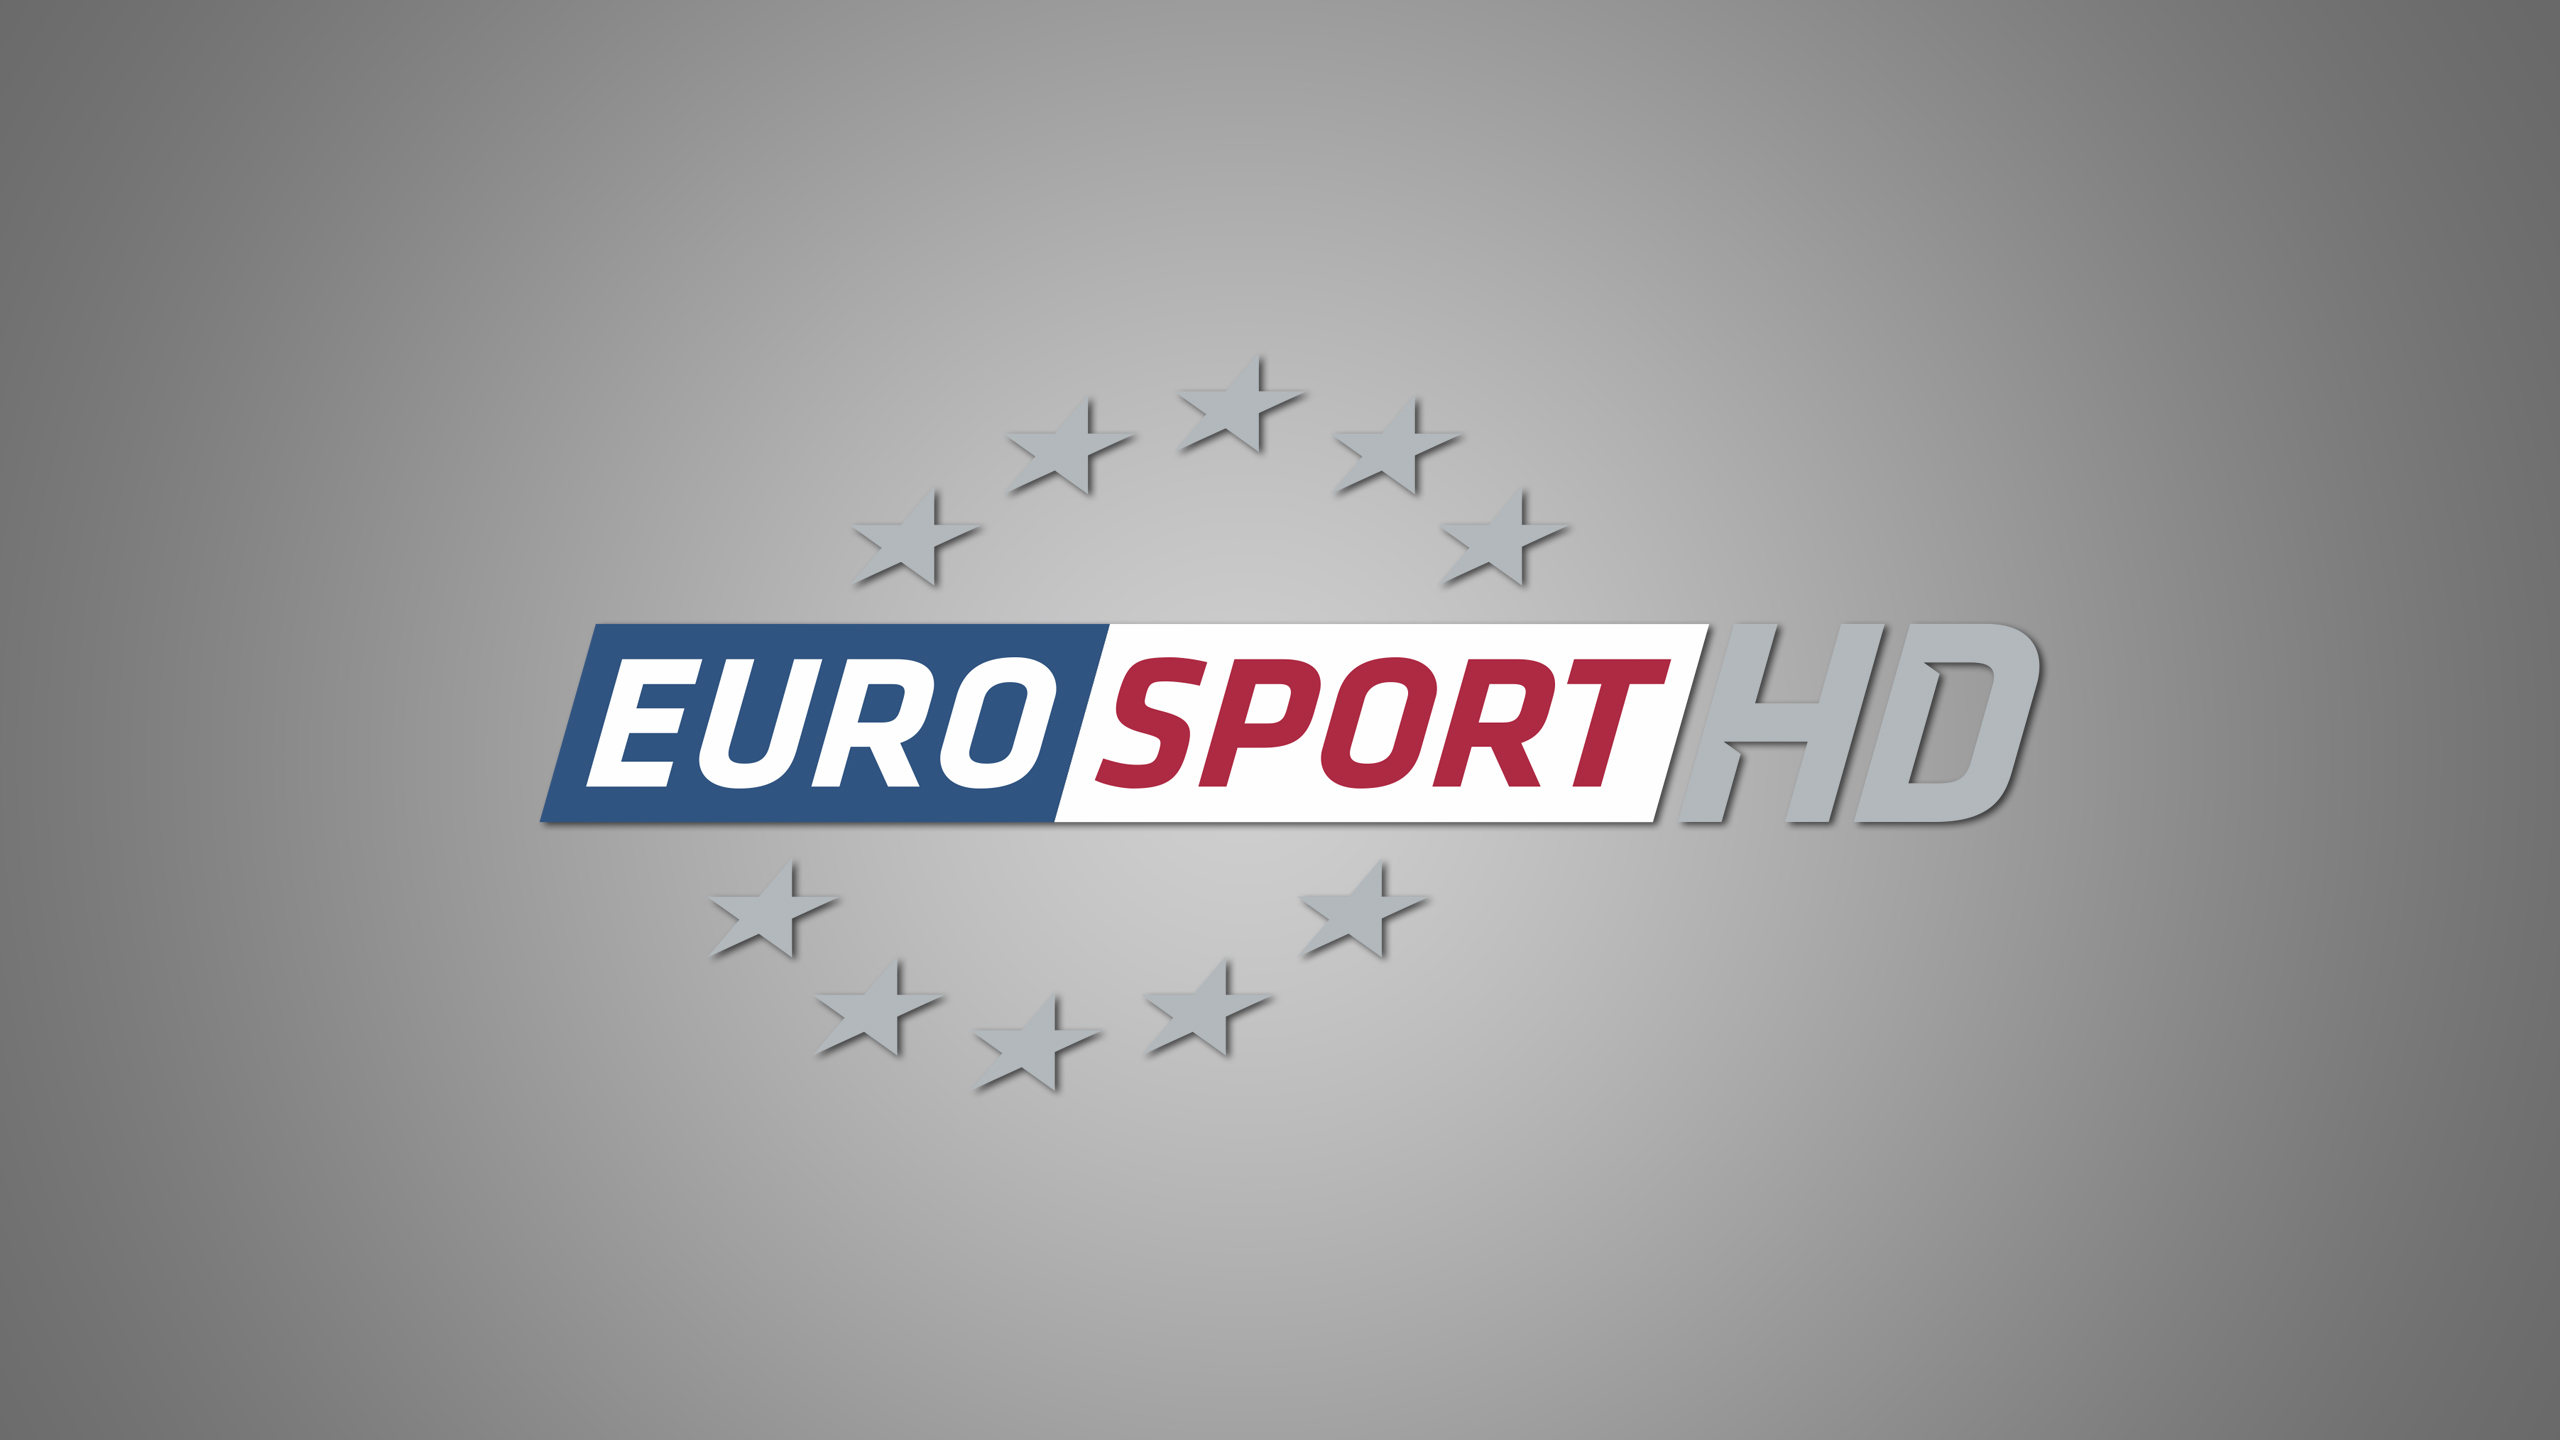 6 спорт 1. Евроспорт логотип. Телеканал Евроспорт логотип. Спортивные каналы. Спорт 1 HD.